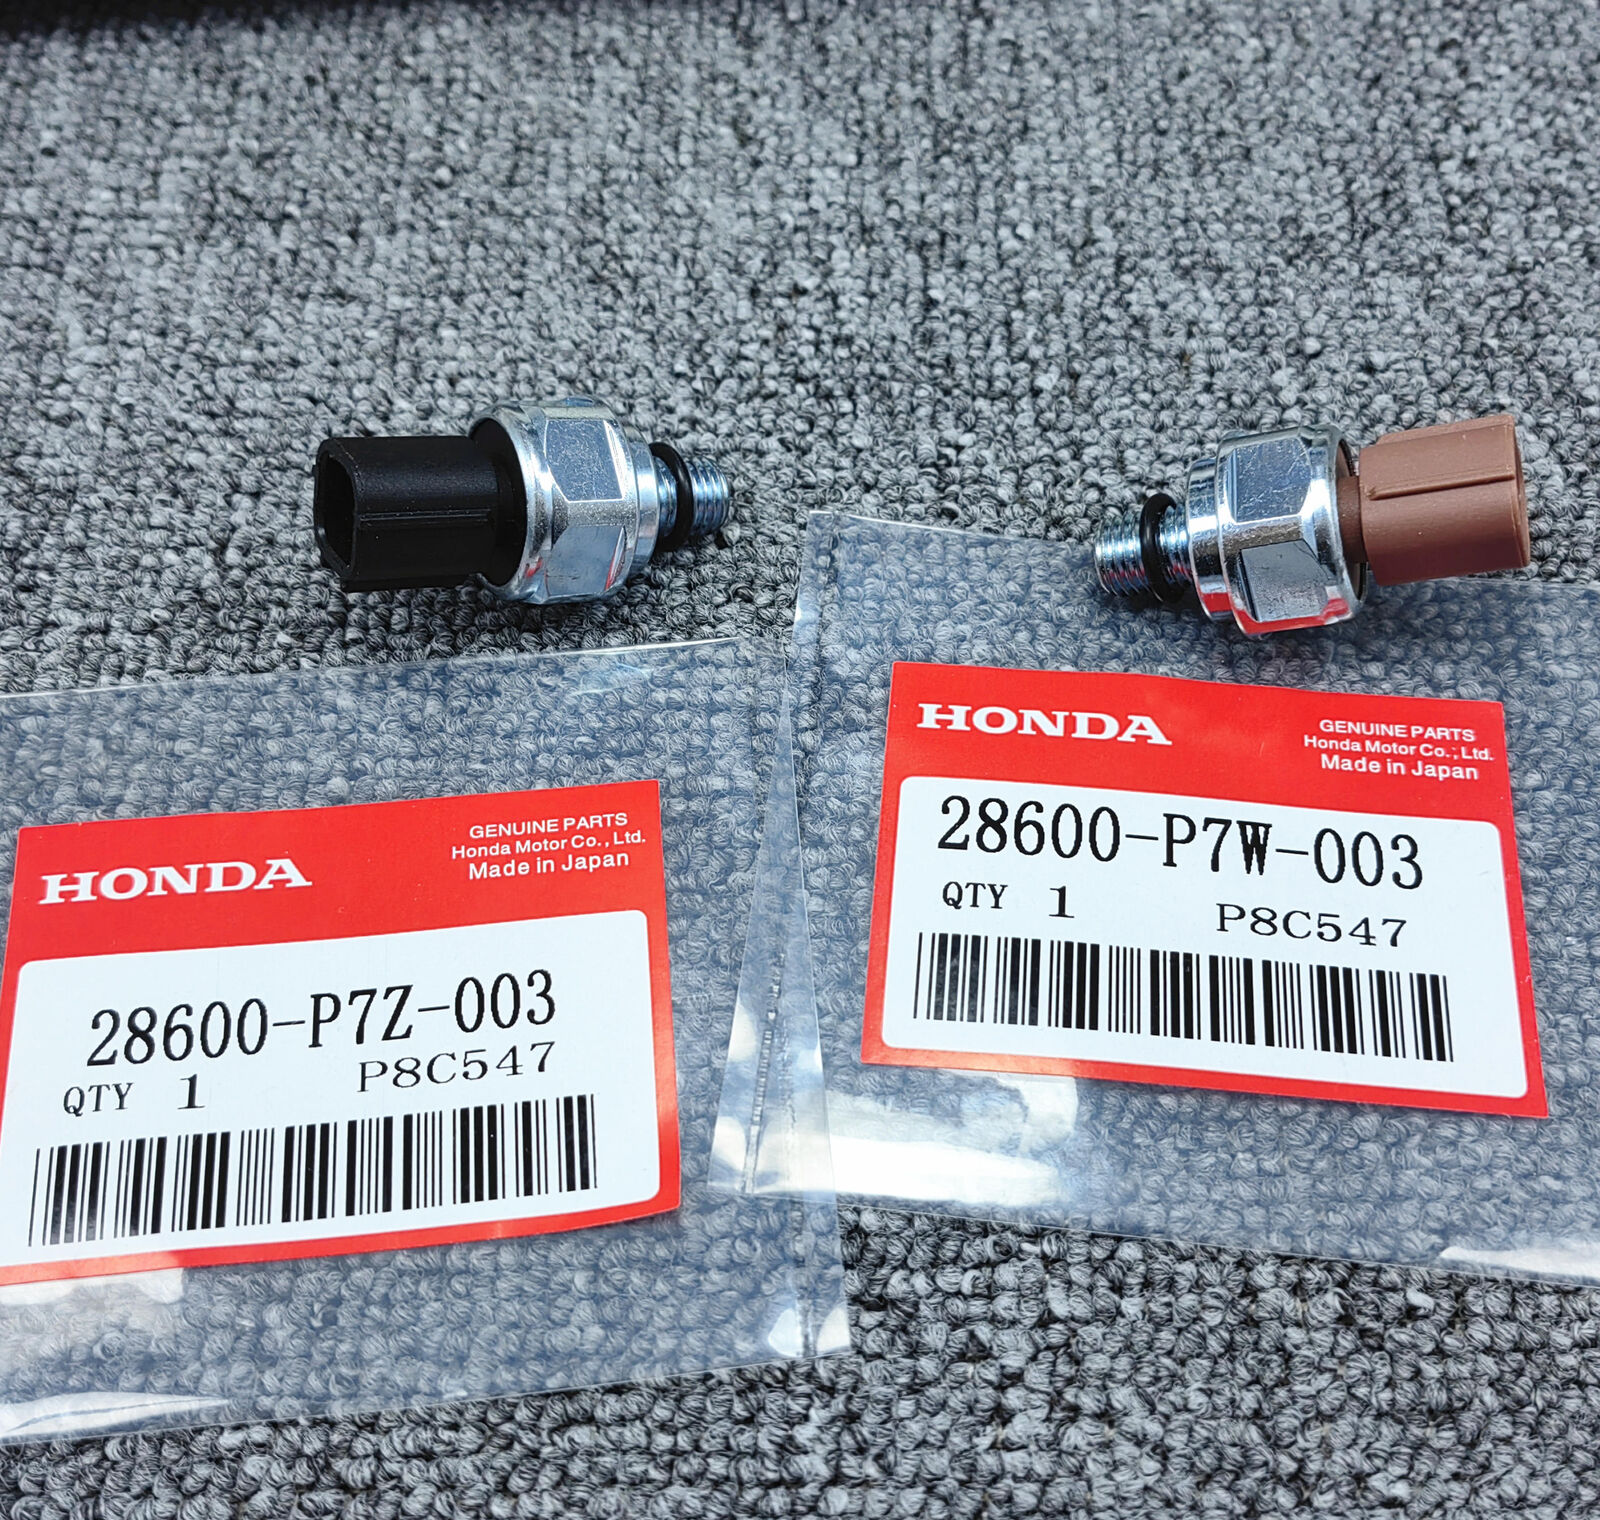 2 Pcs NEW Transmission Pressure Switches For Honda 28600-P7W-003 & 28600-P7Z-003